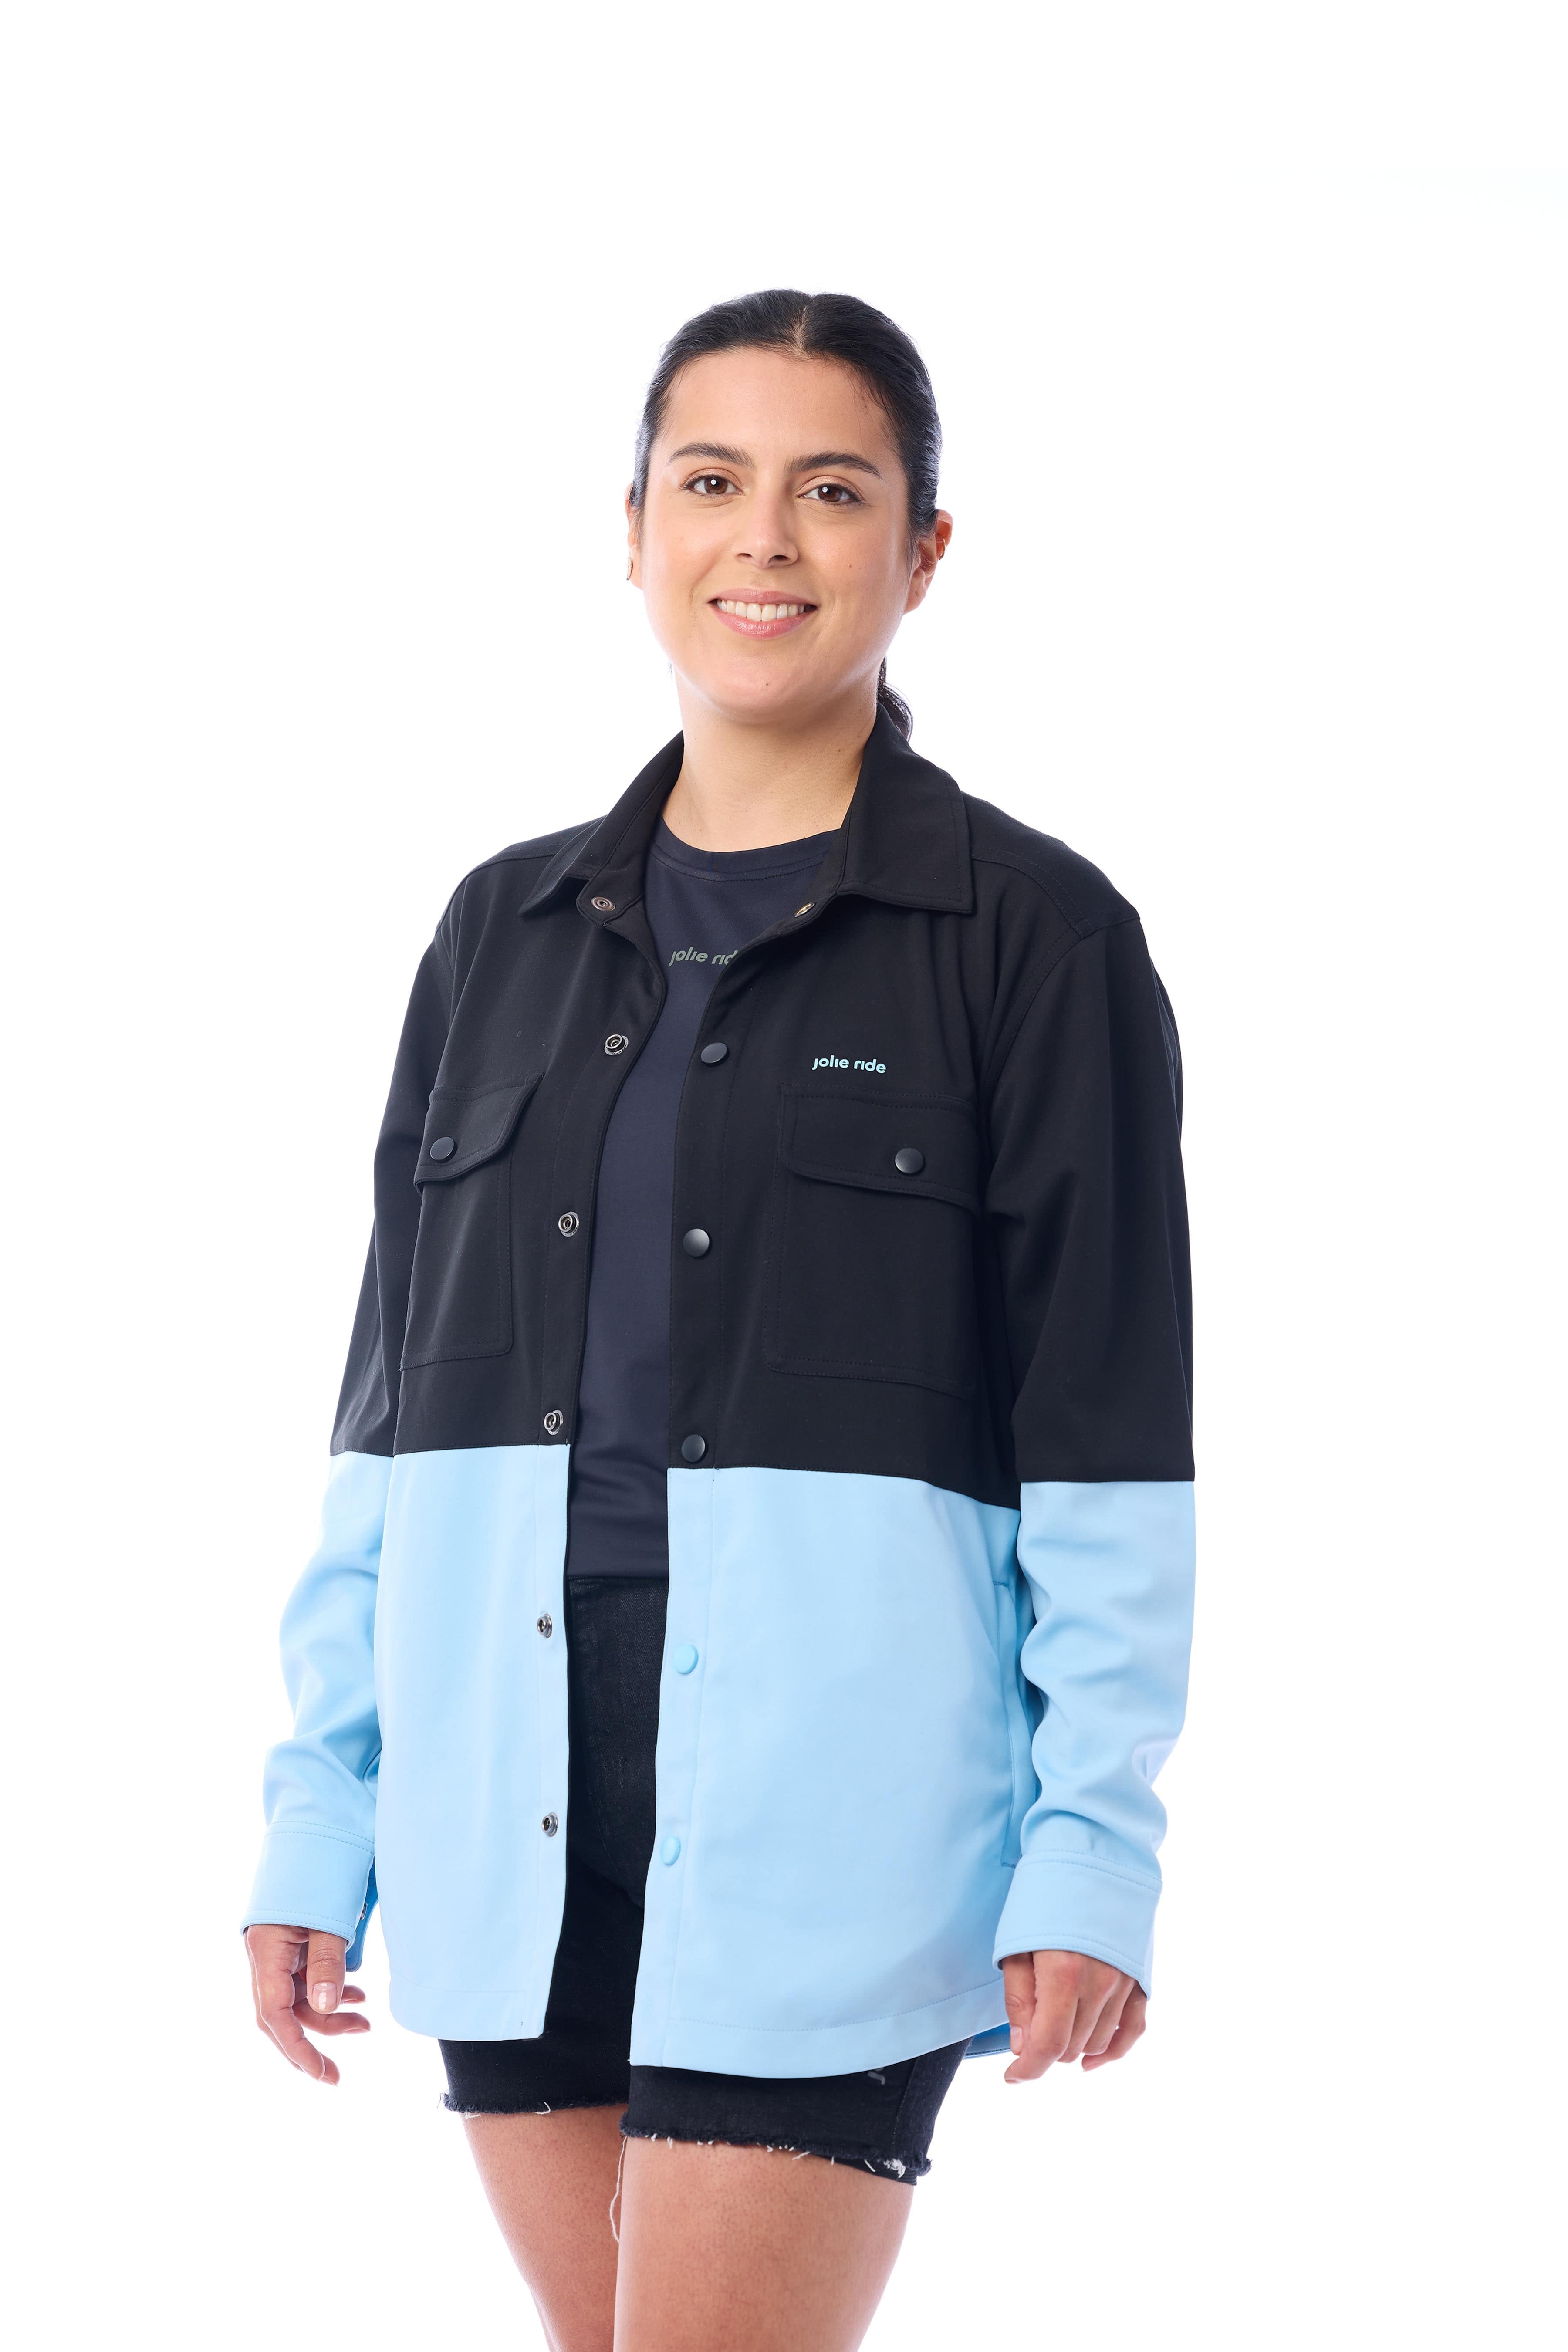 JolieRide Shirt Black-Blue / XS mtb windbreaker shirt - ultimate adventure gear for unpredictable weather